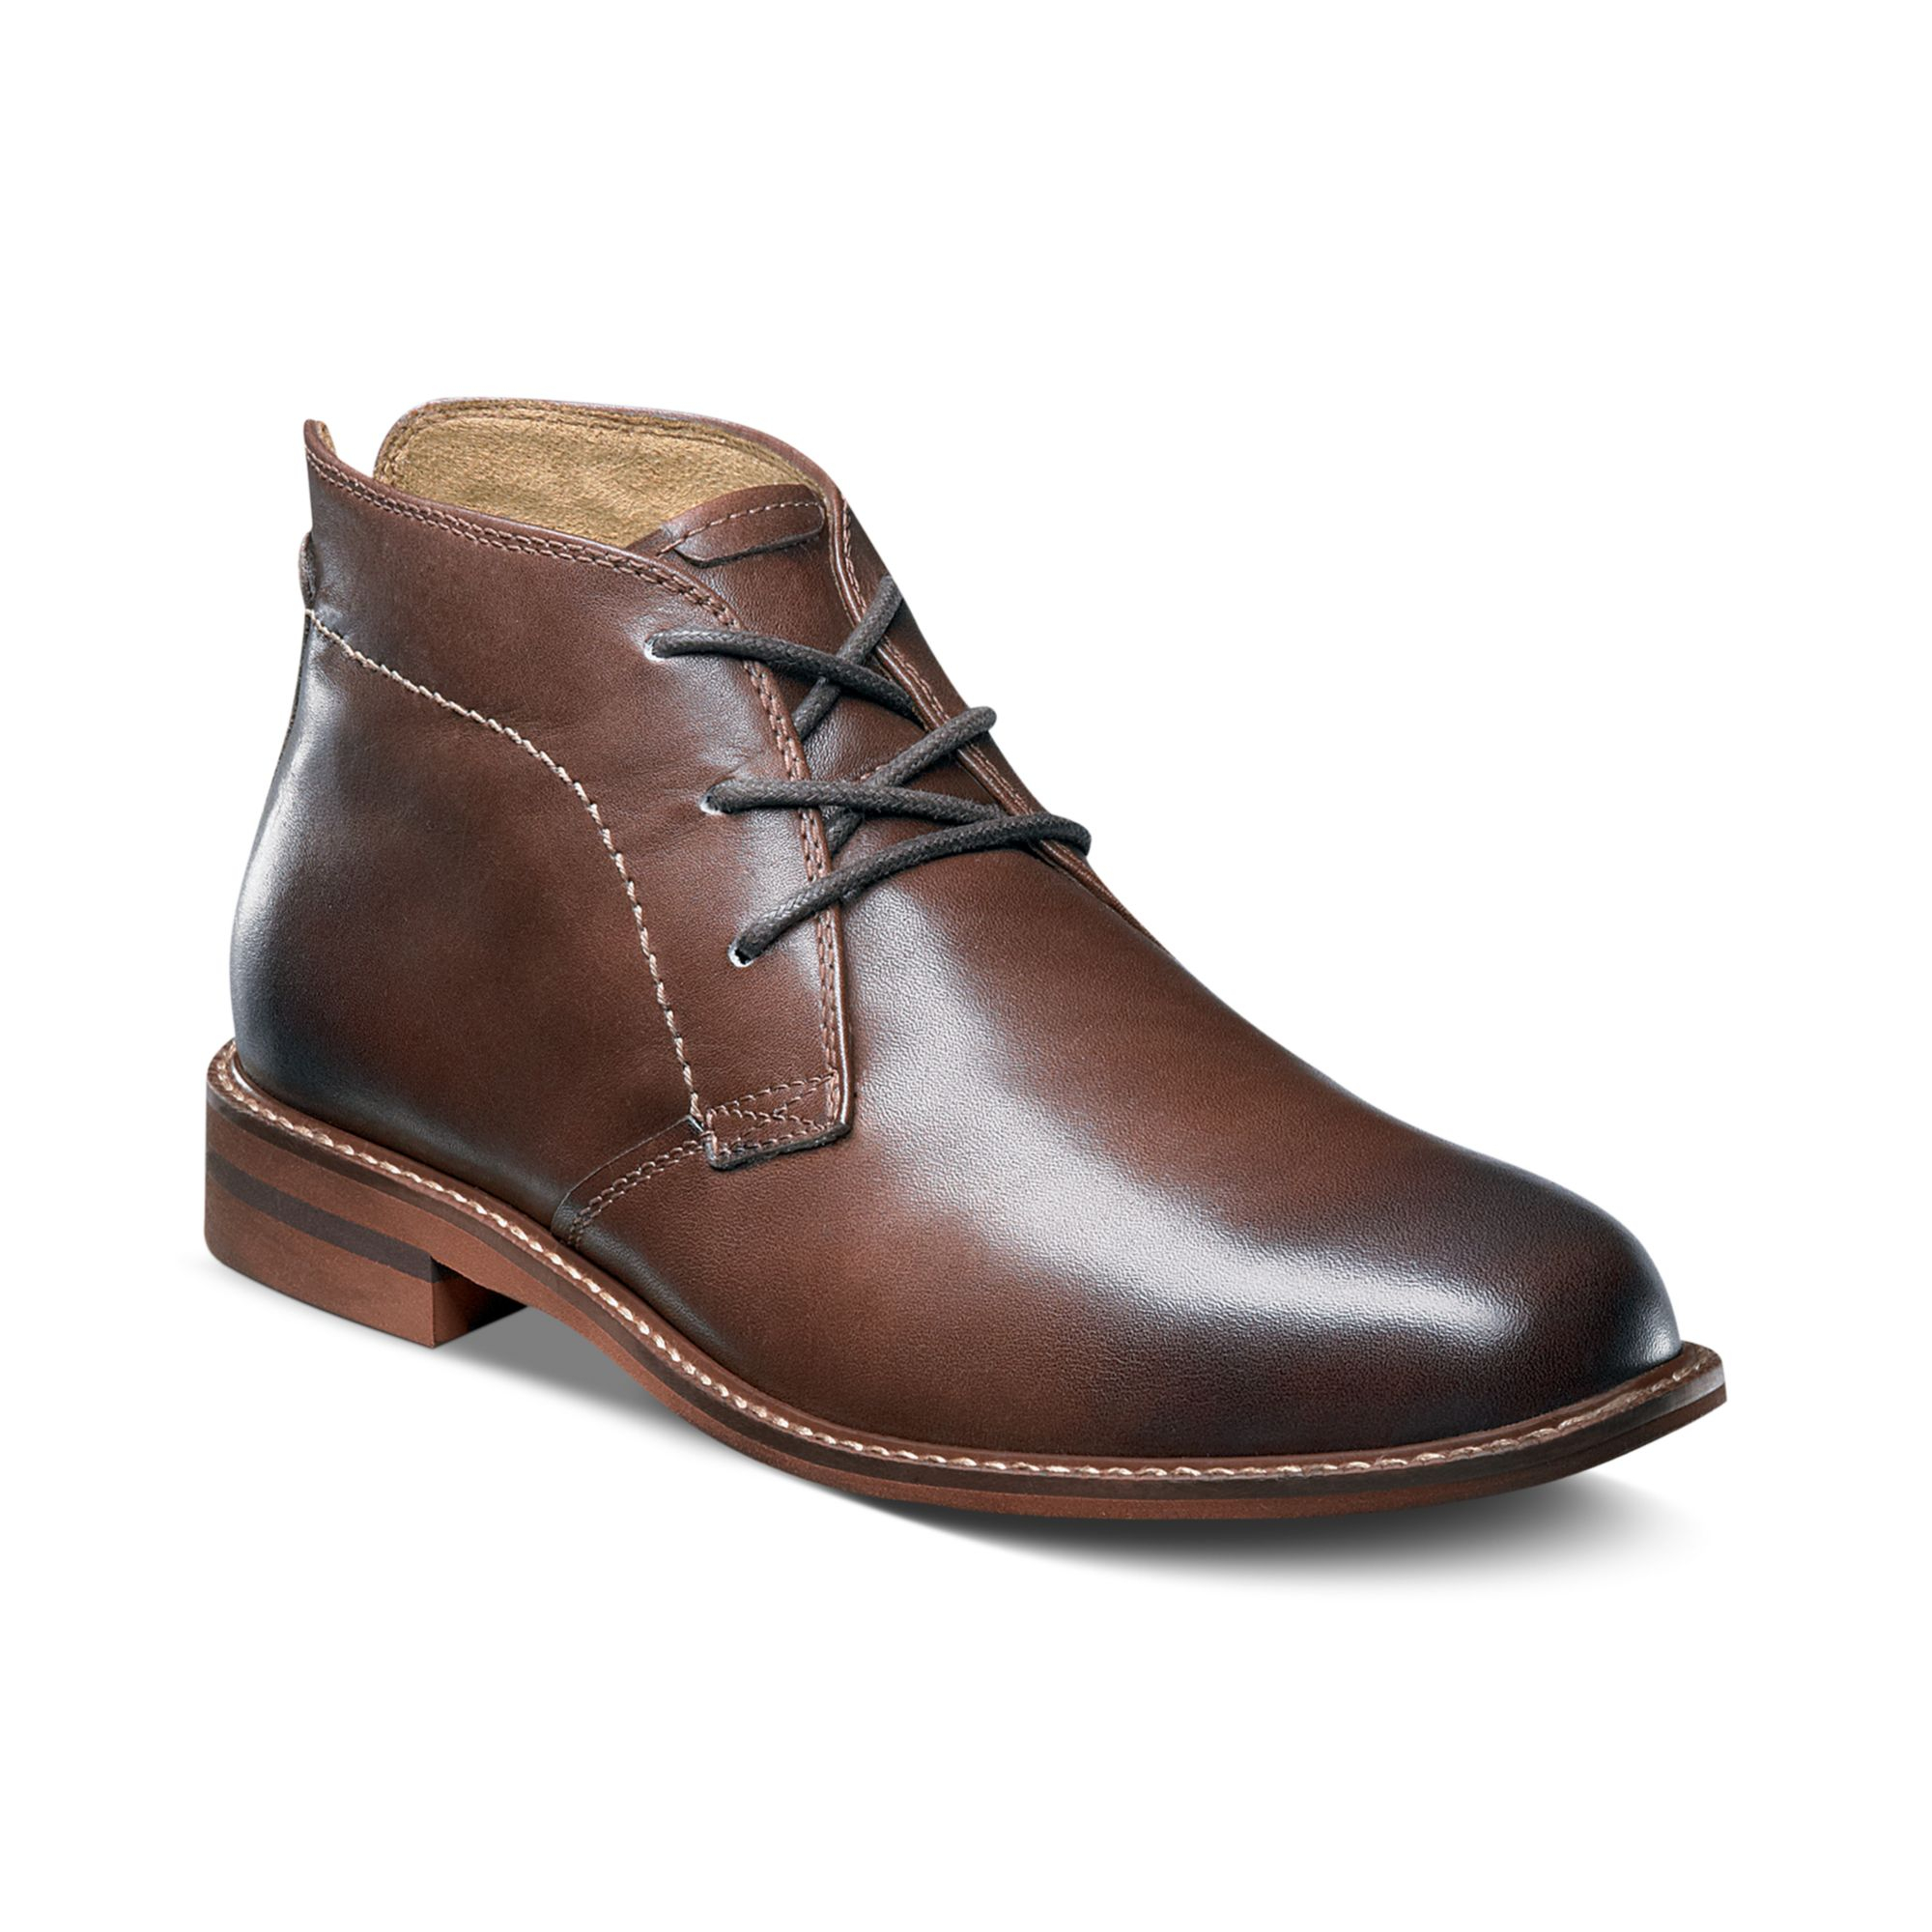 Florsheim Doon Chukka Boots in Brown for Men - Lyst